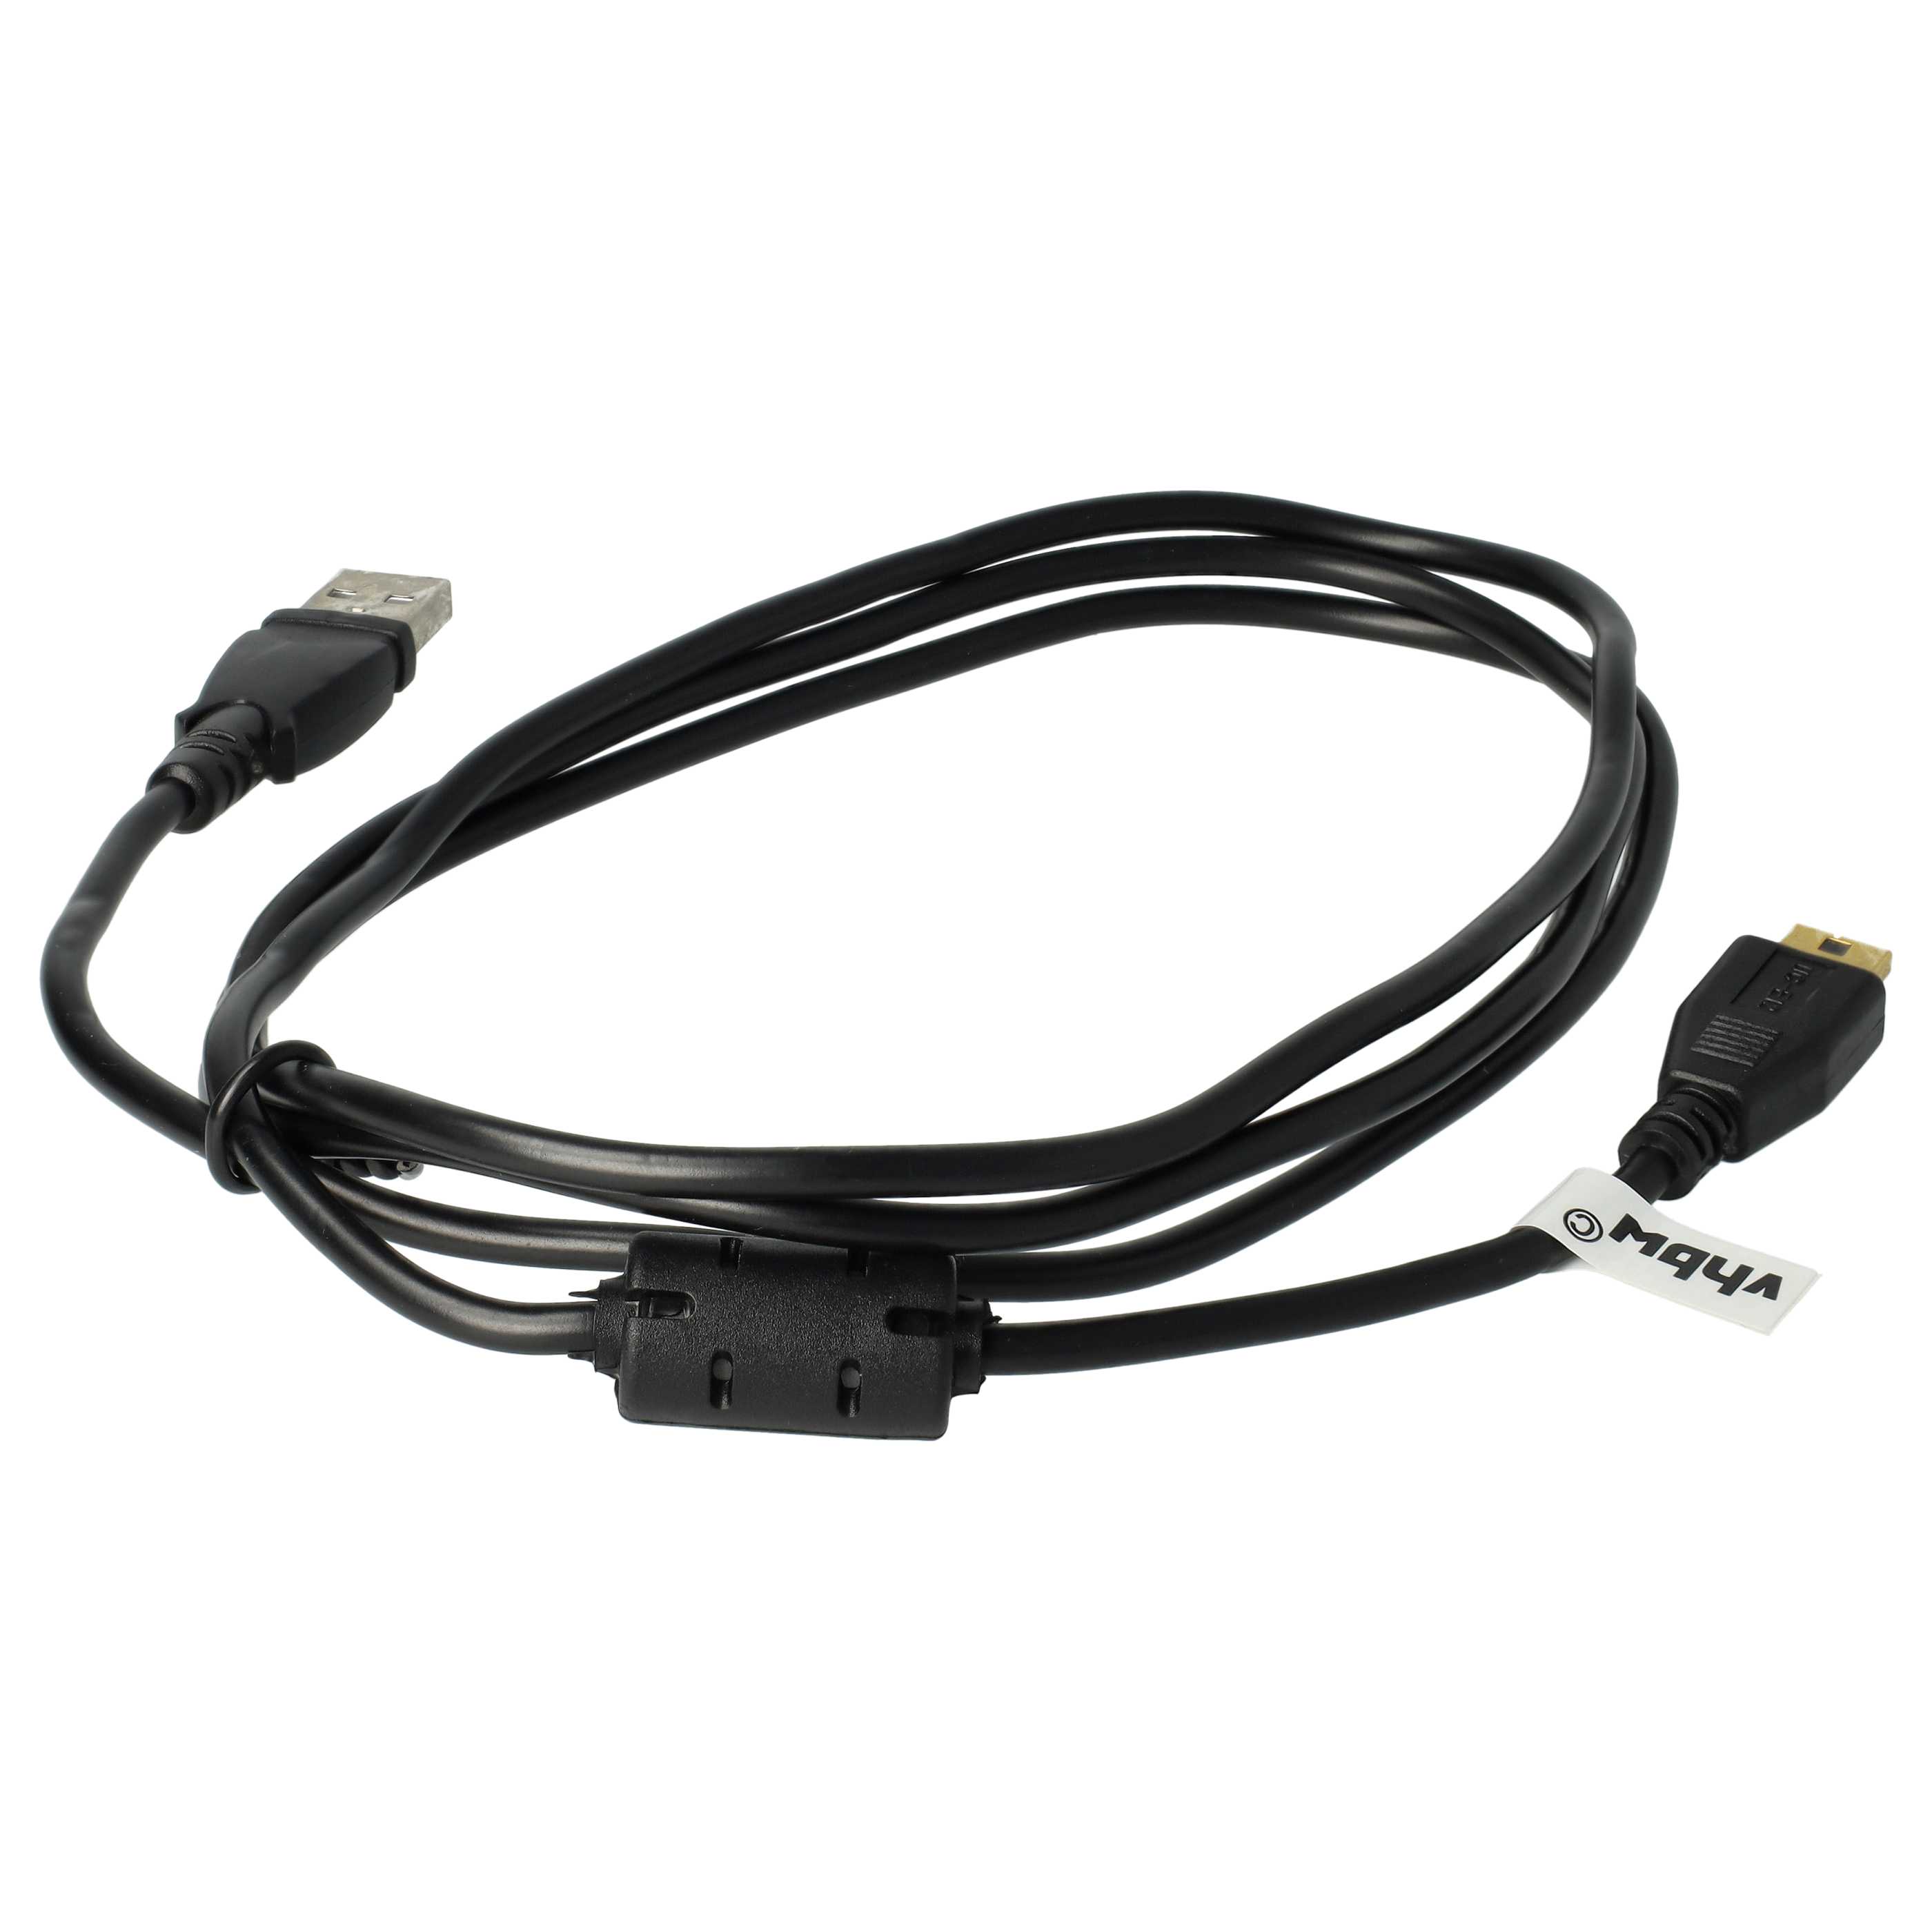 Kabel USB do aparatu Nikon zamiennik Nikon UC-E12 - 150 cm 